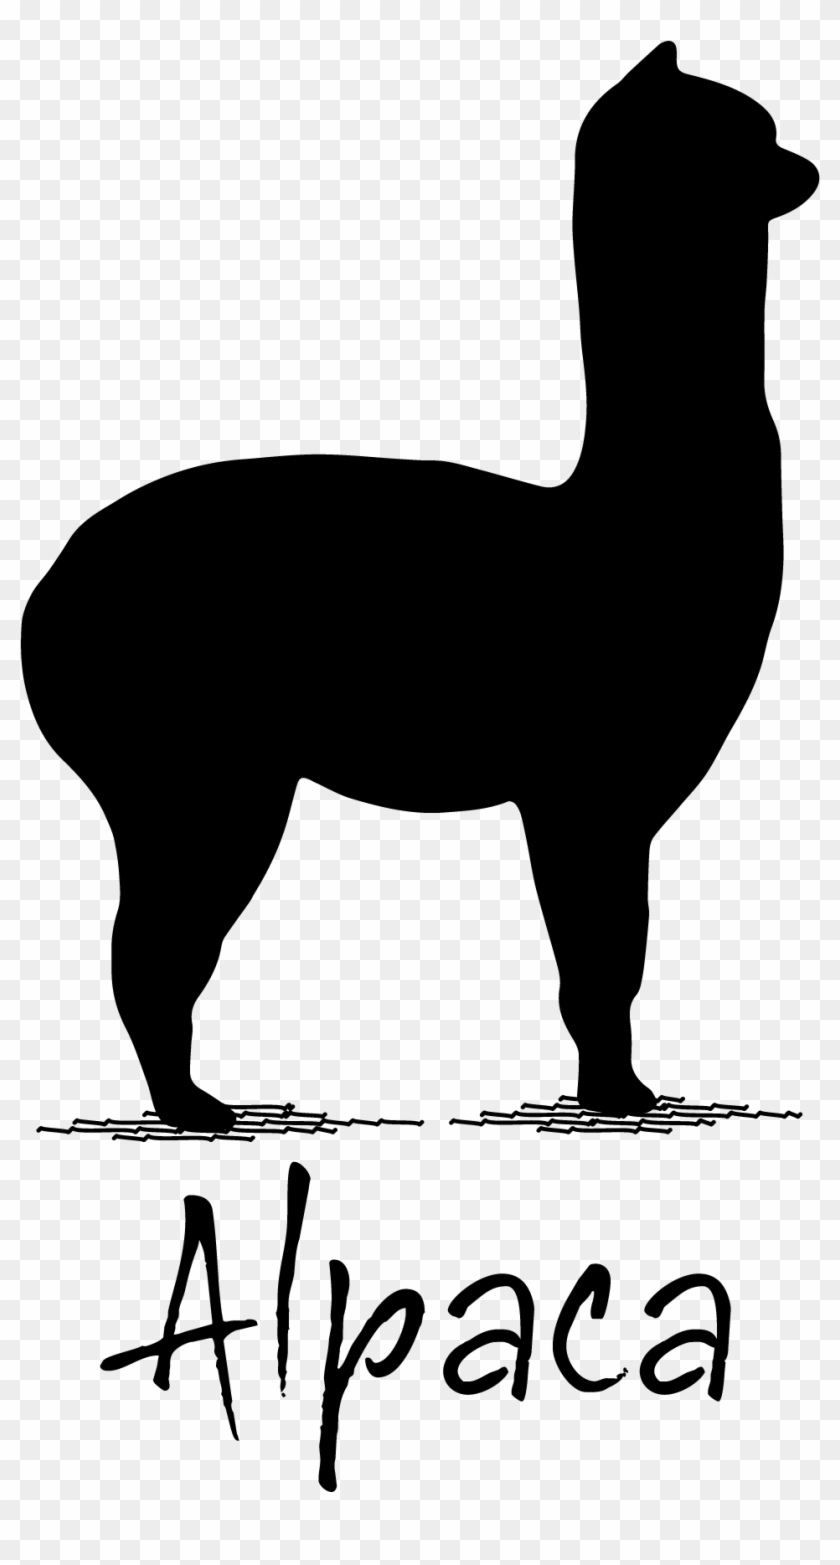 alpaca logo